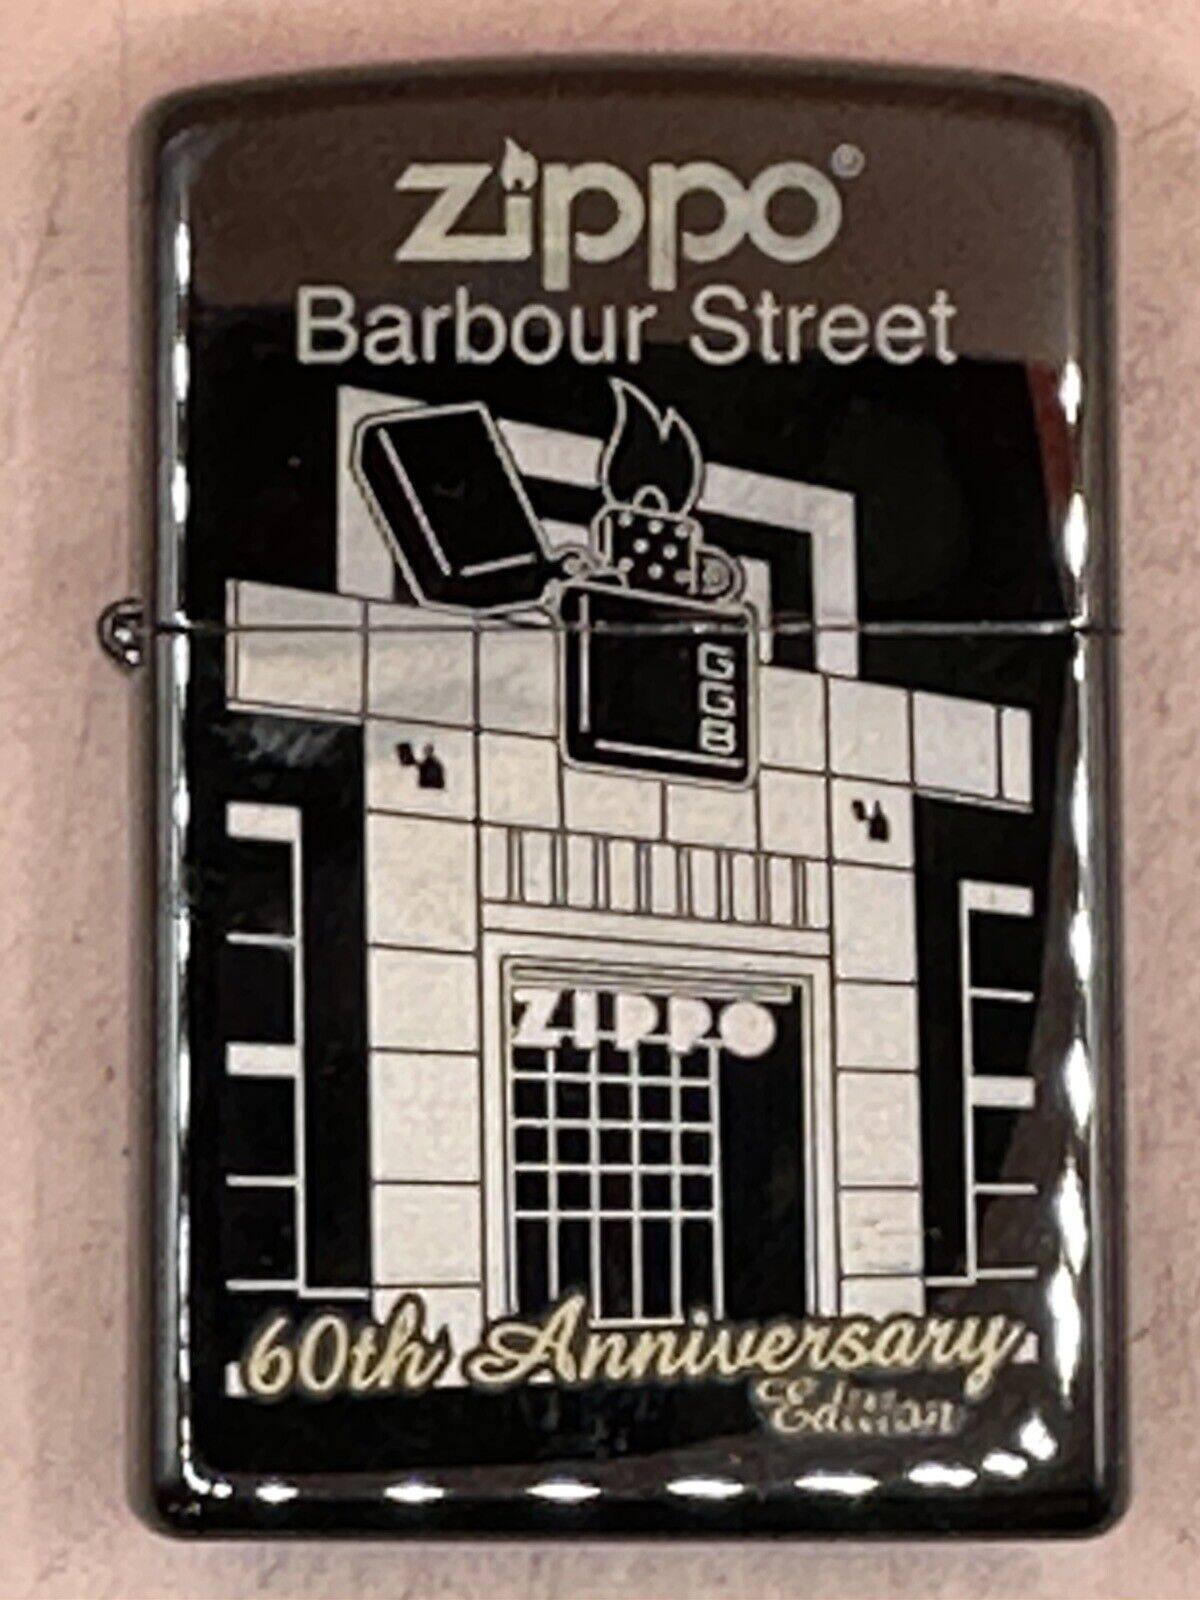 2014 Barbour Street 60th Anniversary Edition Black Ice Zippo Lighter NEW